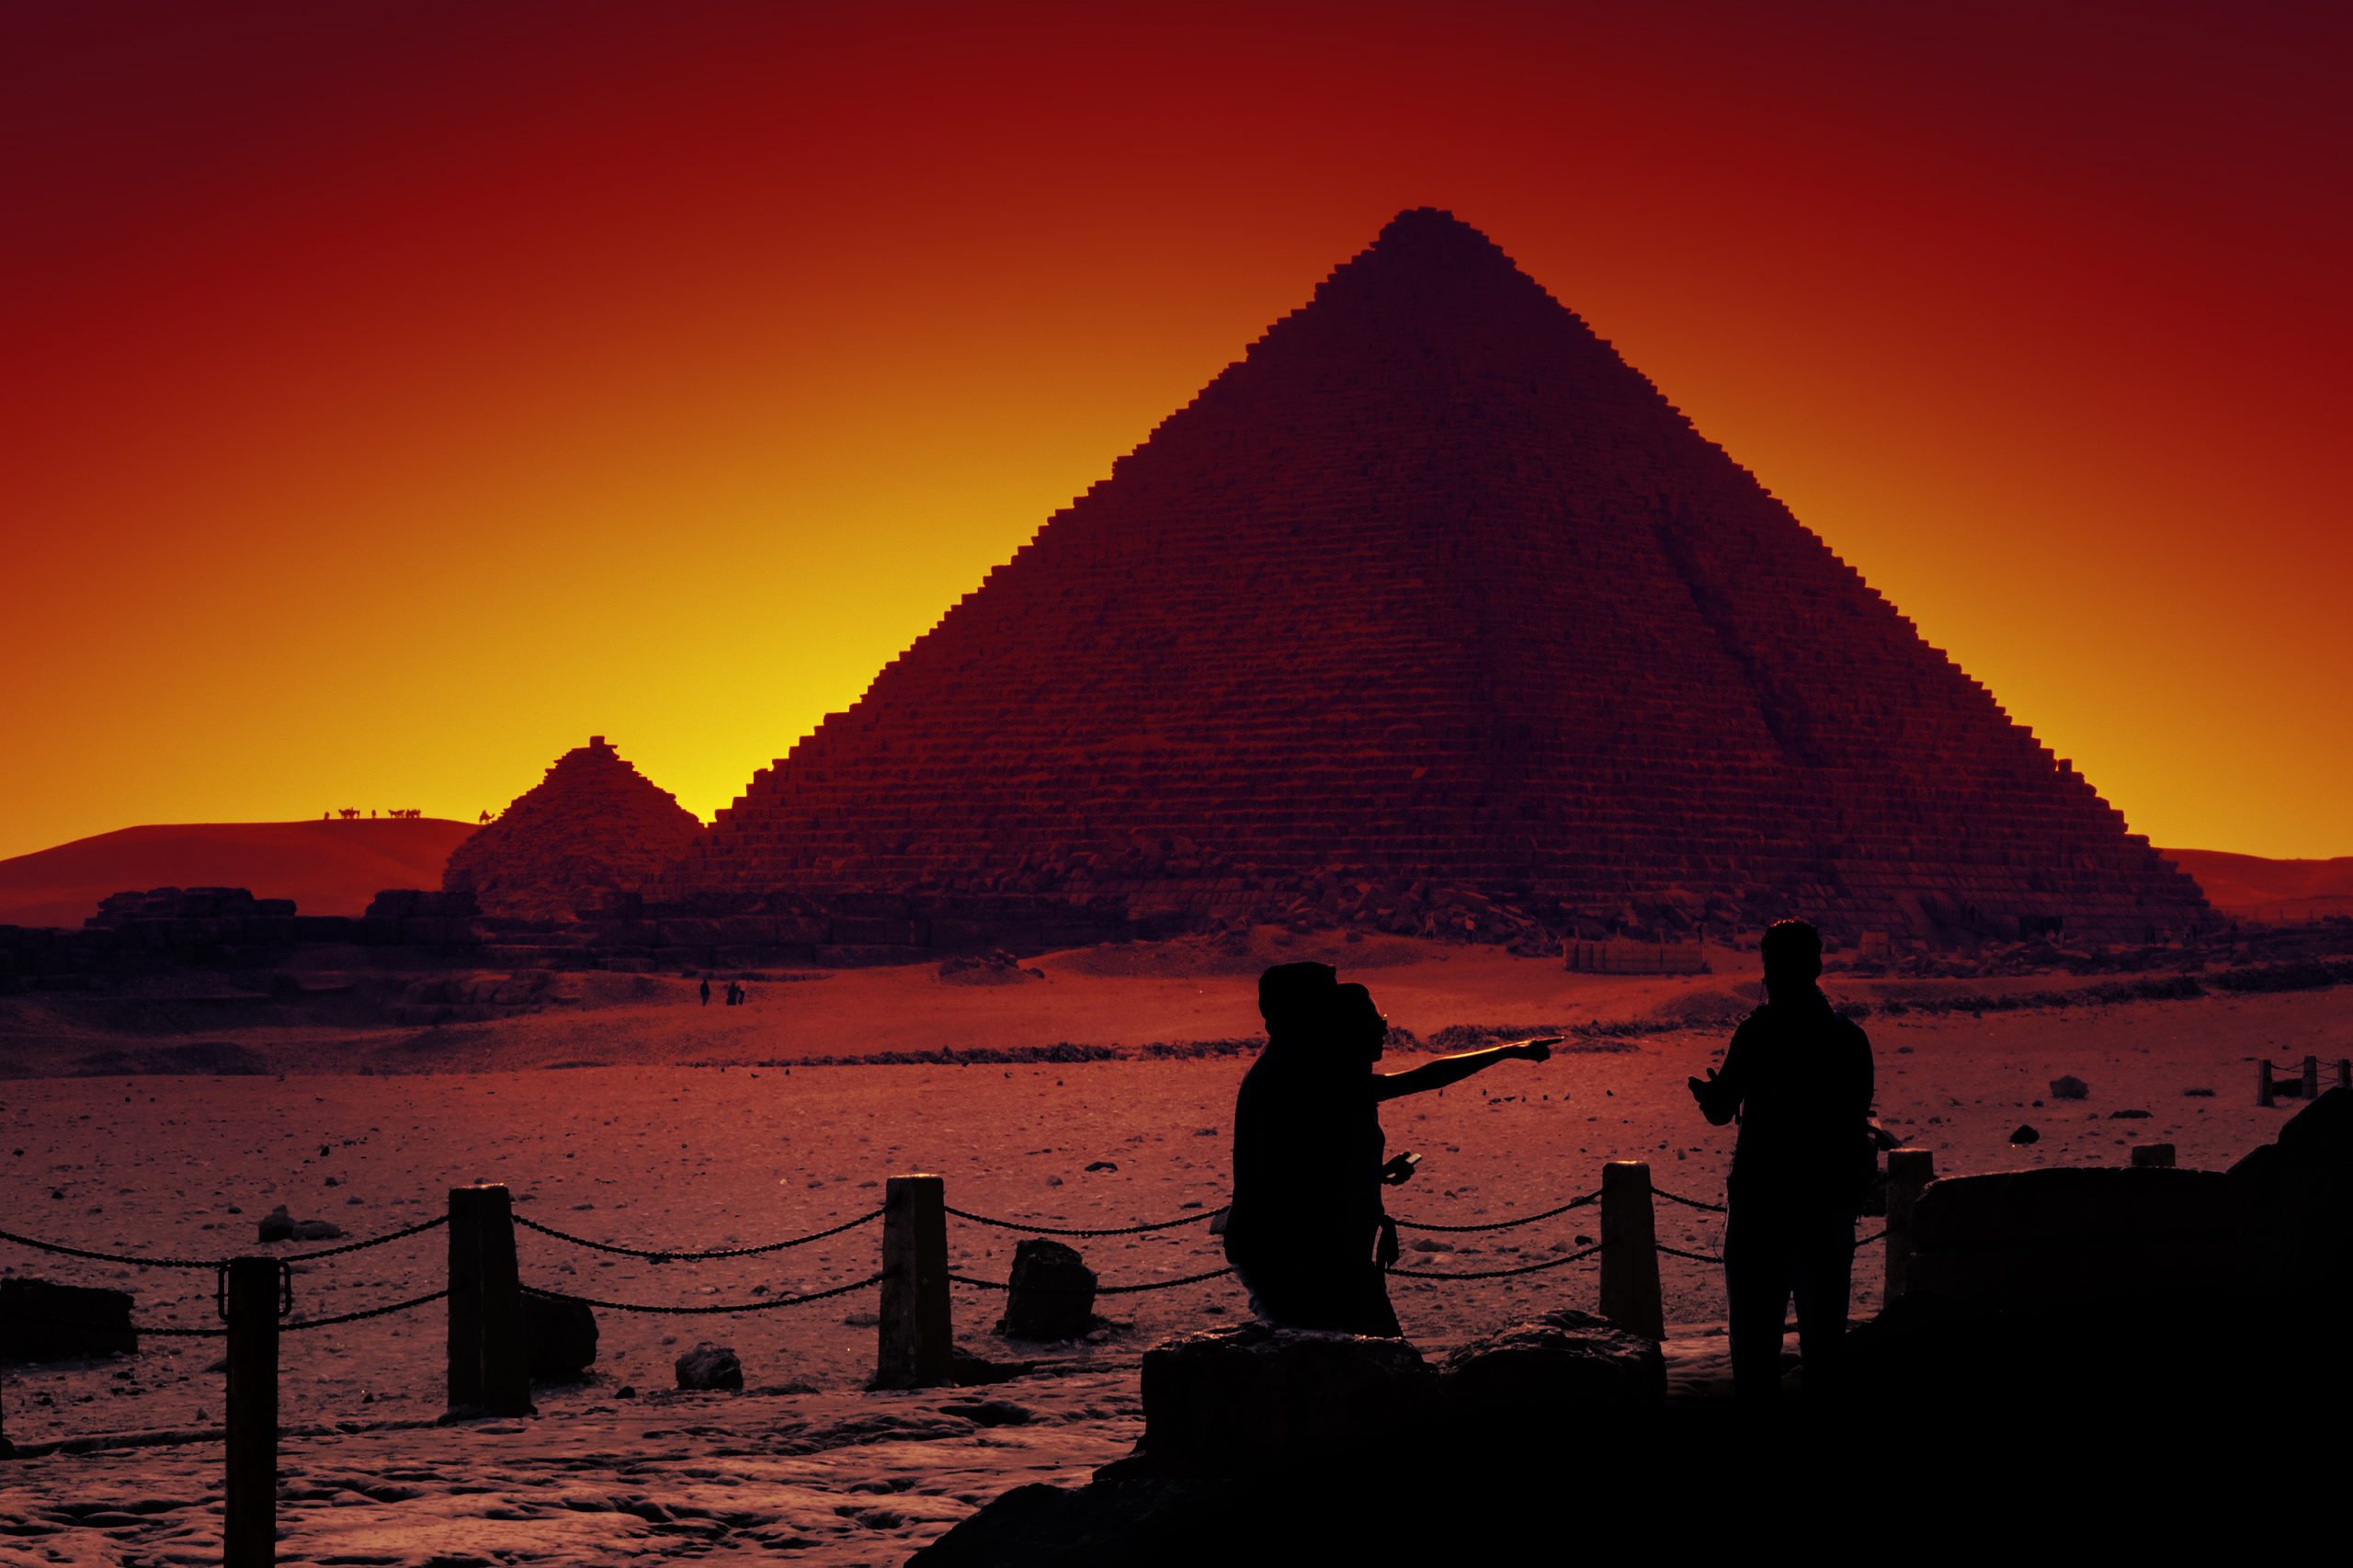 An image showing the pyramids at Giza. Depositphotos.